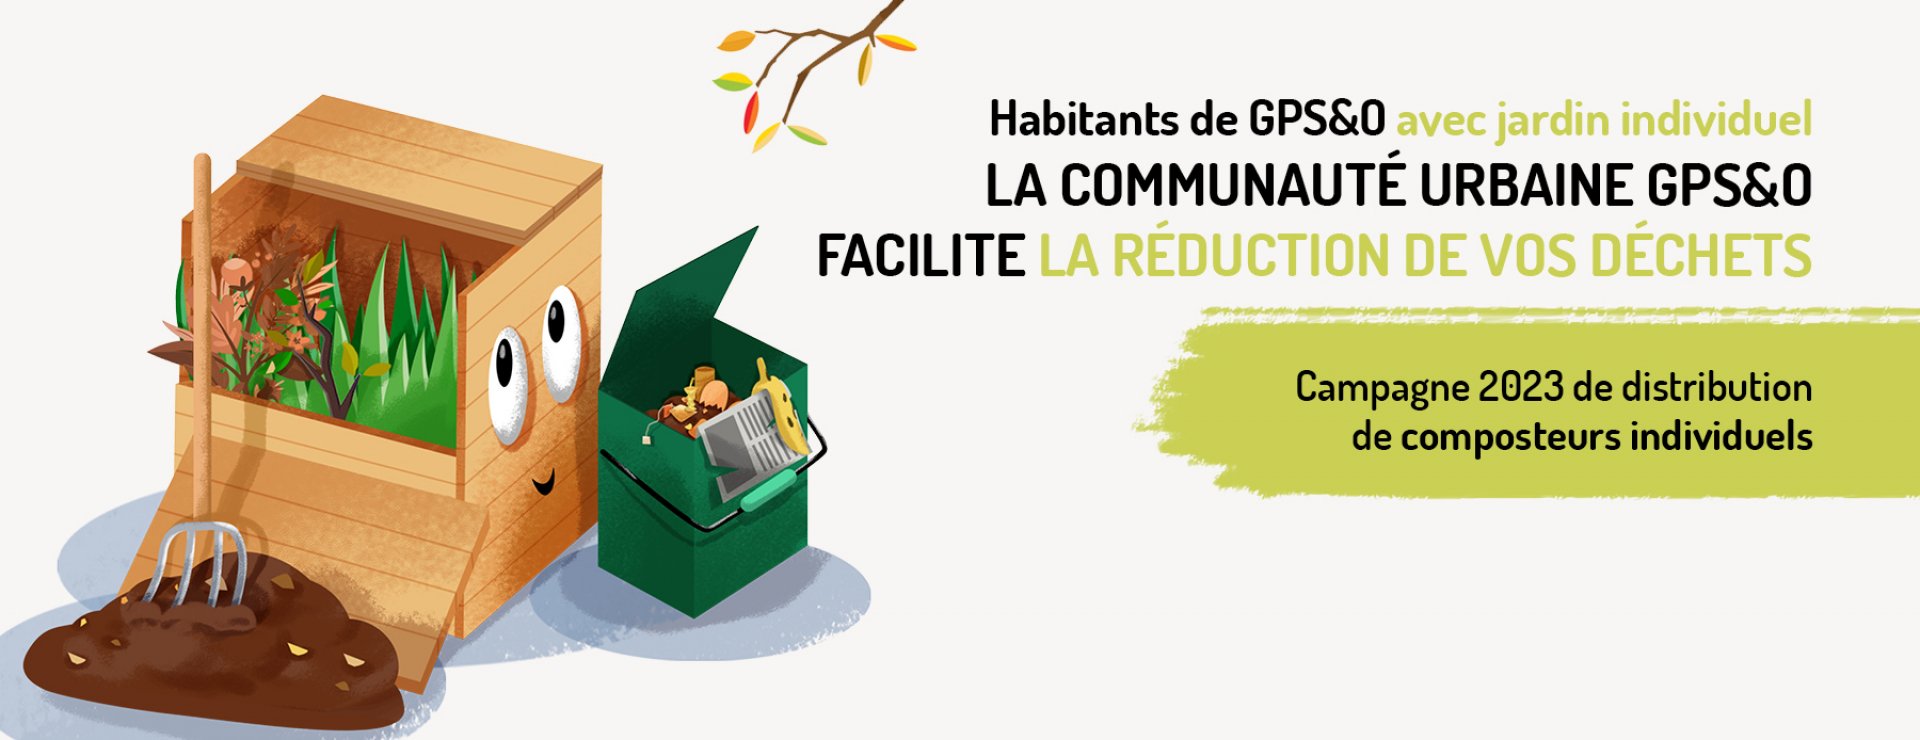 Campagne 2023 distribution de composteurs individuels - GPSEO